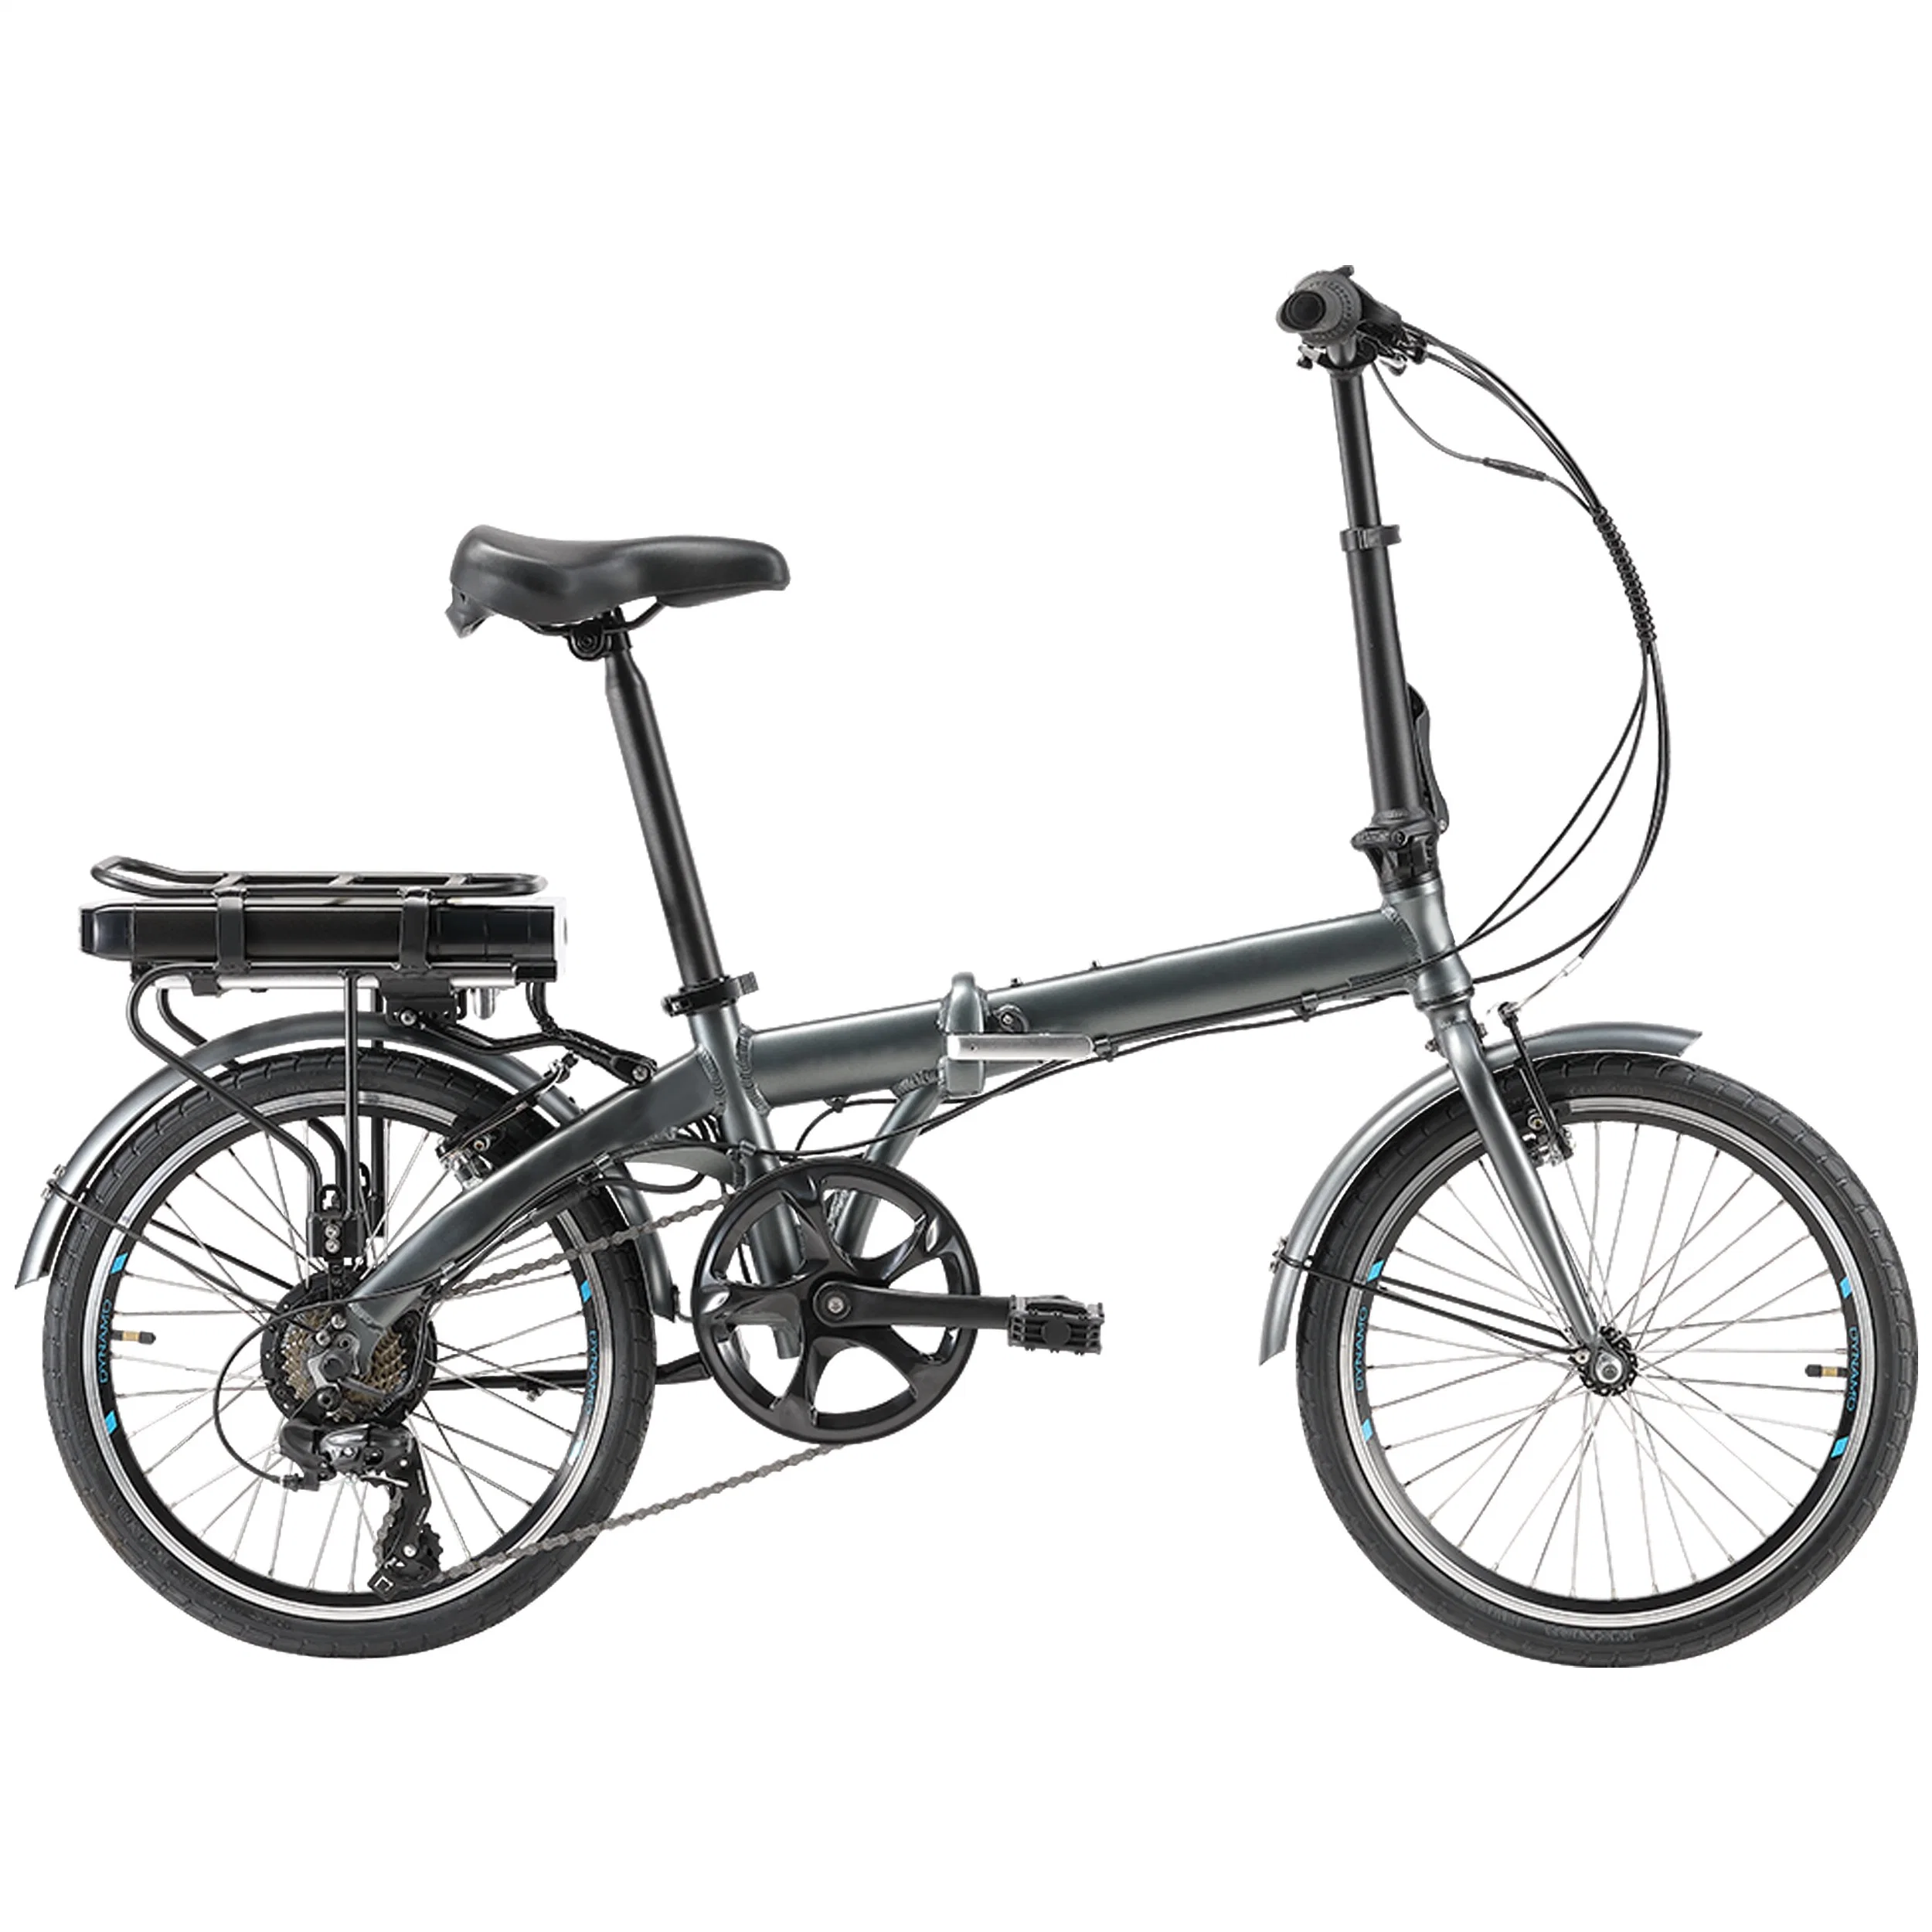 Mini bicicleta eléctrica plegable Ciudad E Scooter bicicleta plegable Adulto Scooter eléctrico